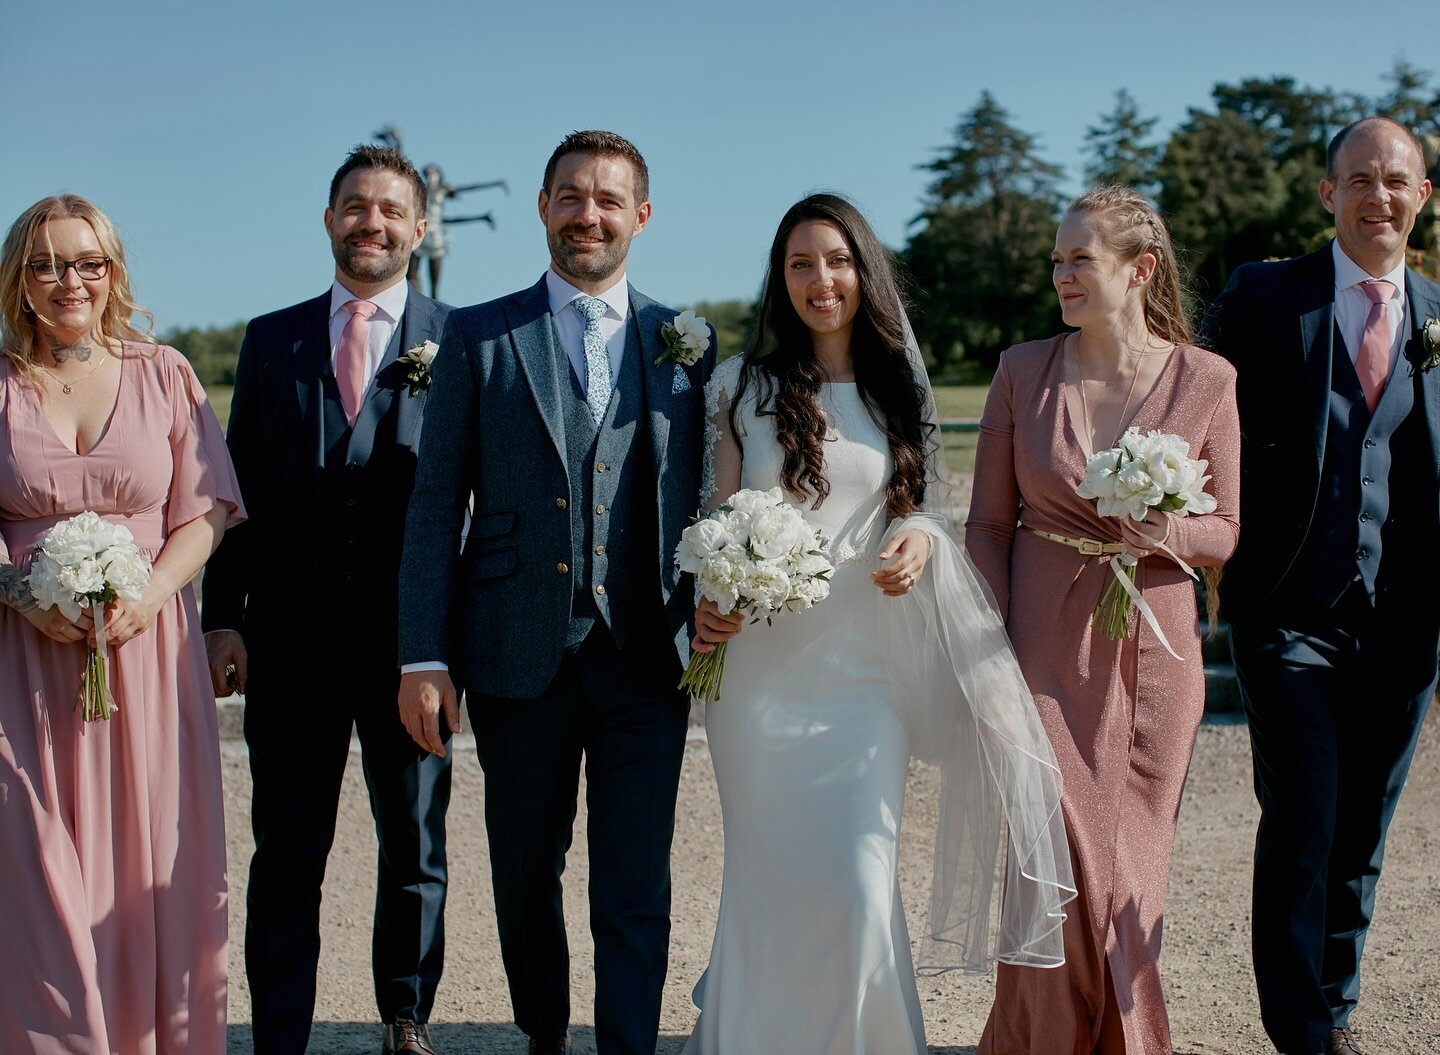 The bridal party 😍

#corkphotographer #corkwedding #irishwedding #irishweddingphotographer #castlemartyrweddings